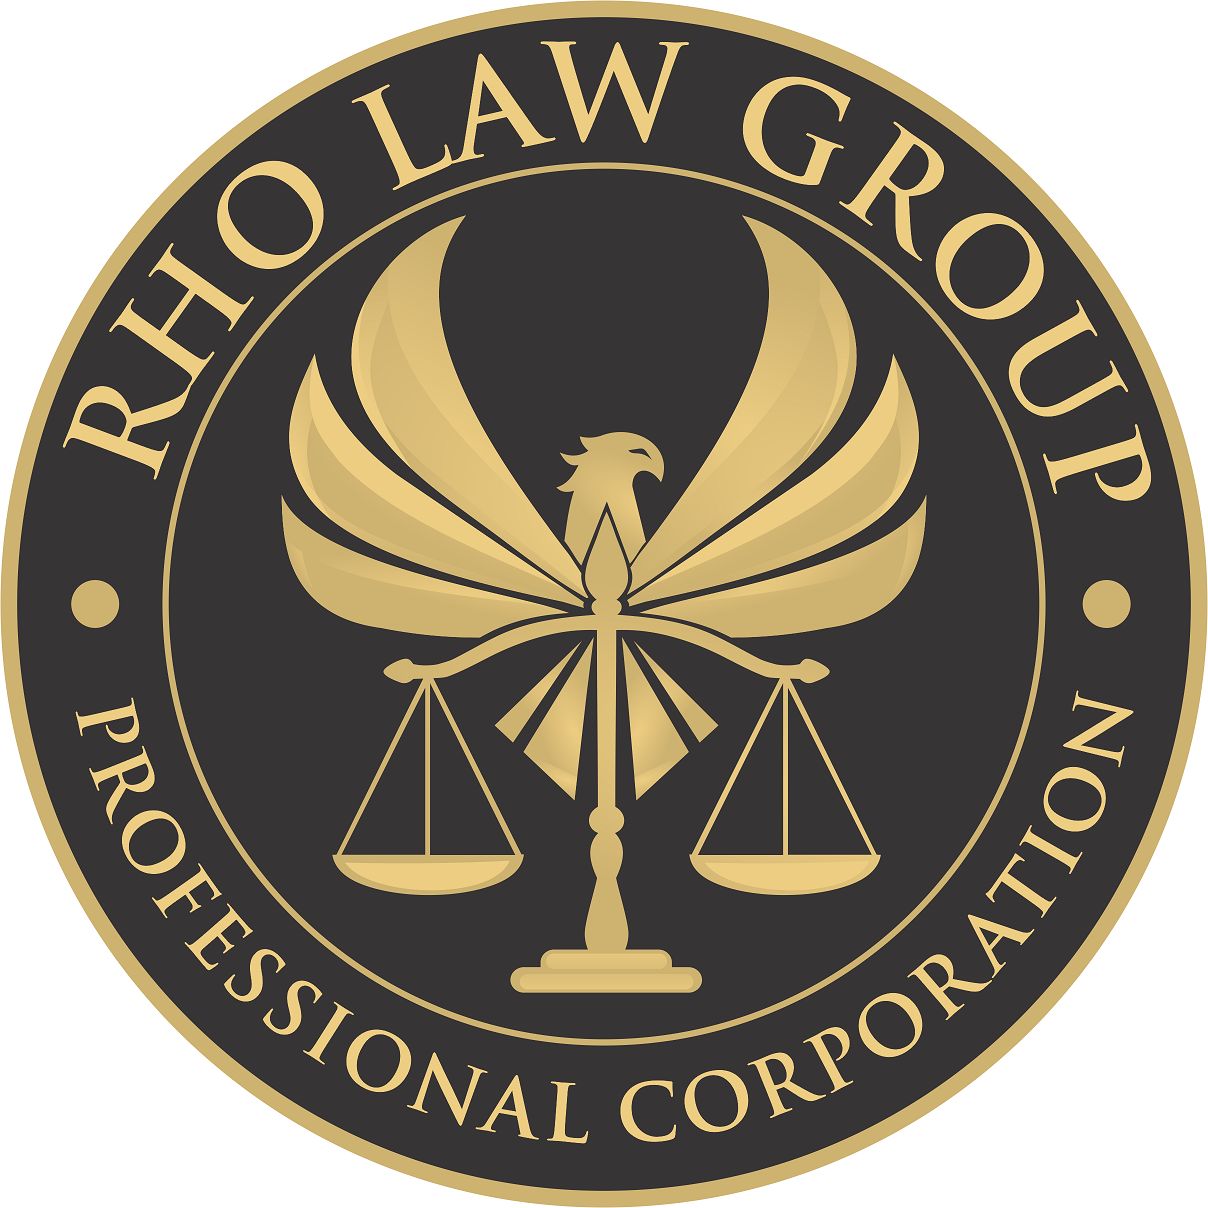 Rho Law Group